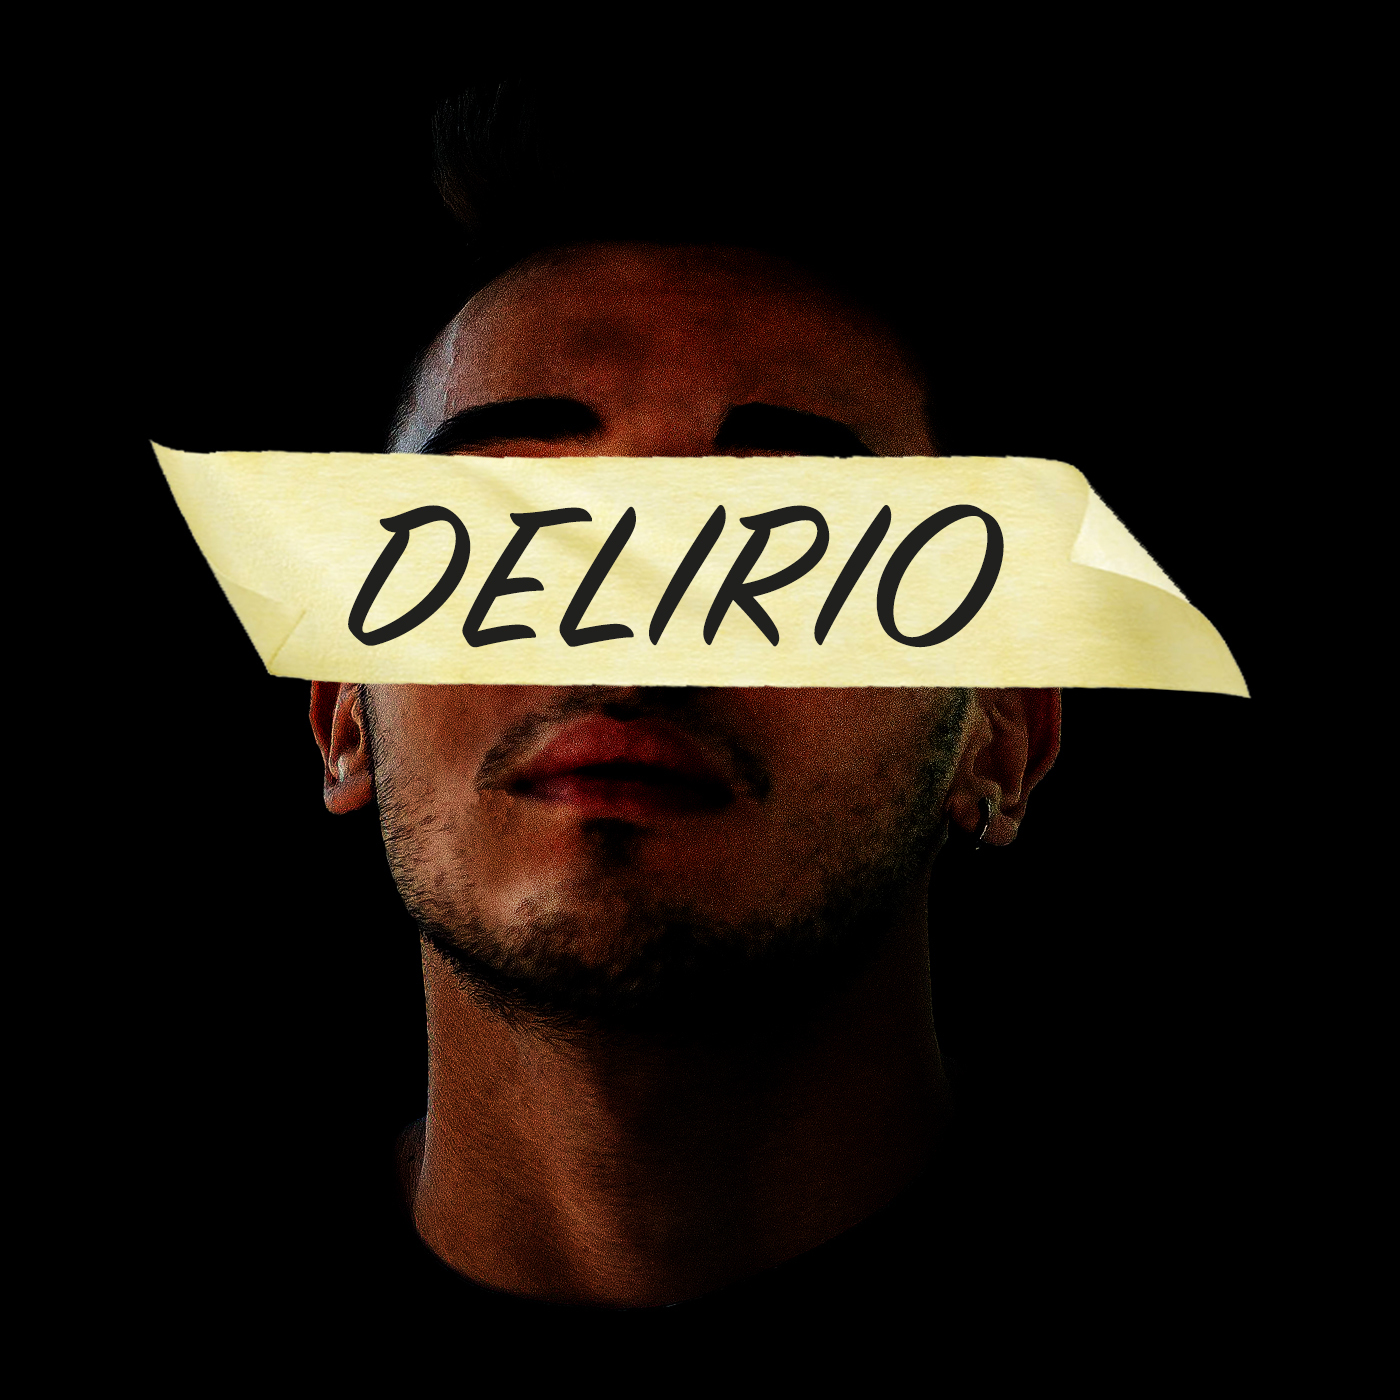 Delirio